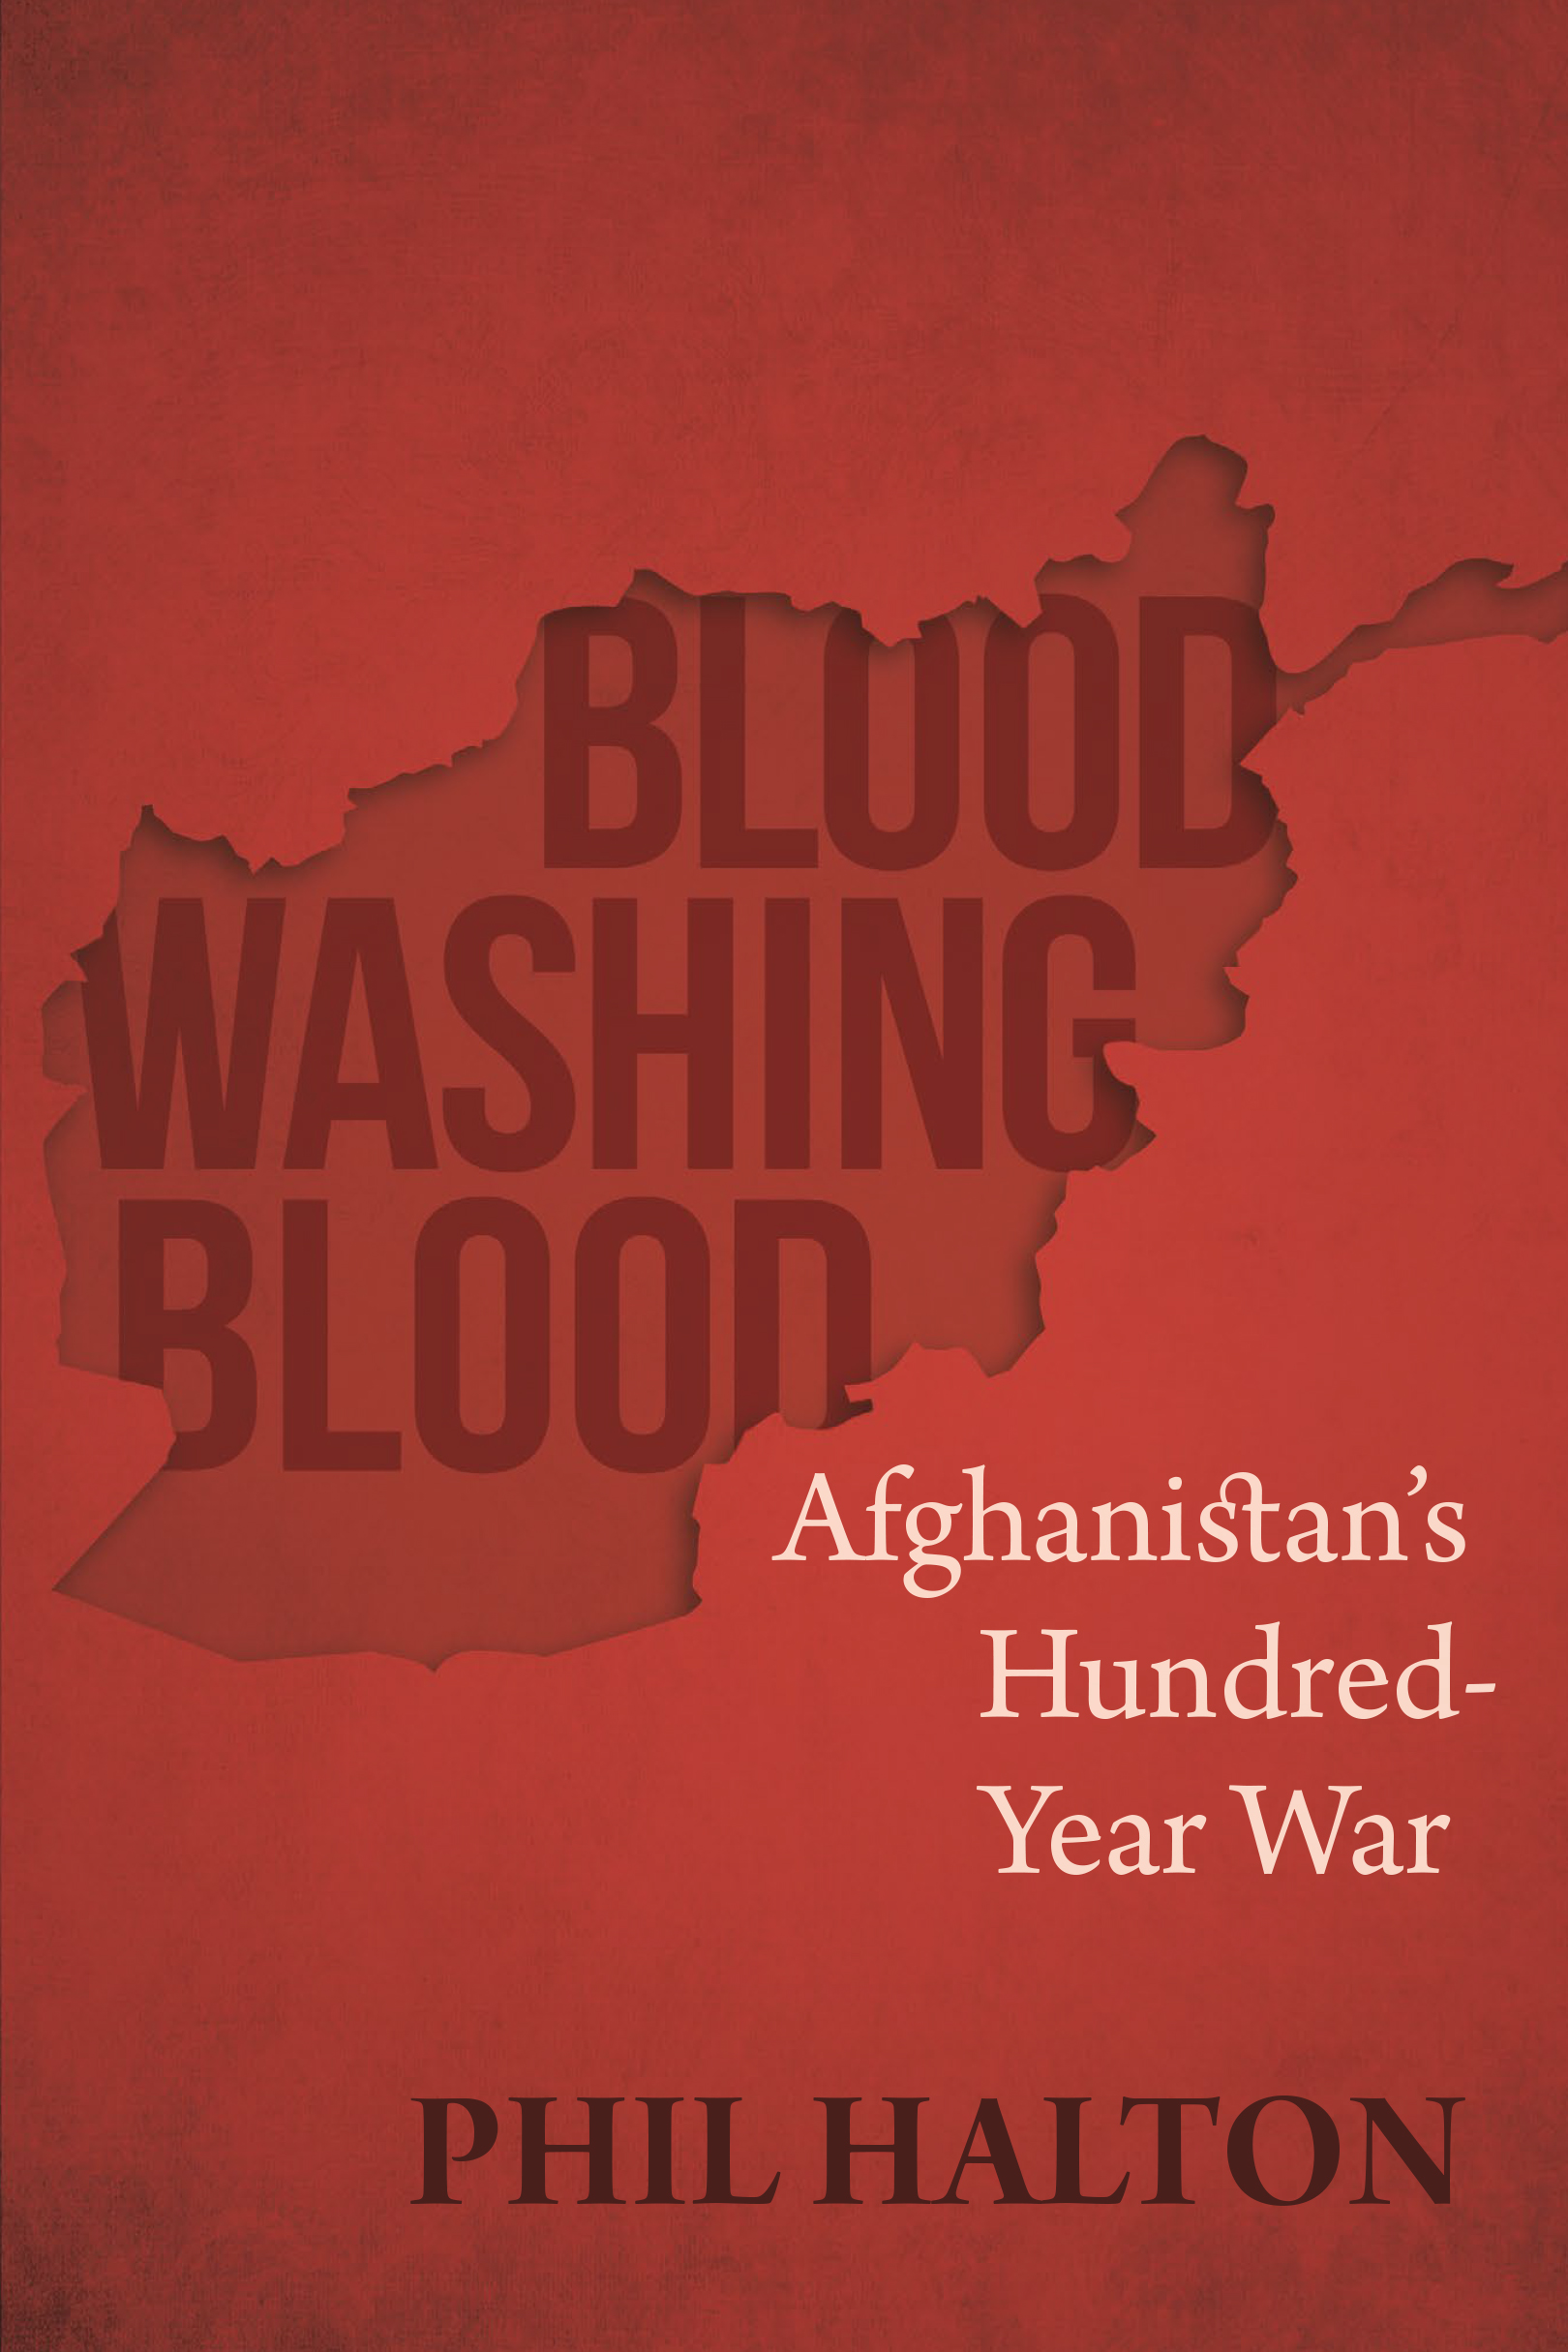 Blood Washing Blood : Afghanistan's Hundred-Year War | Halton, Phil